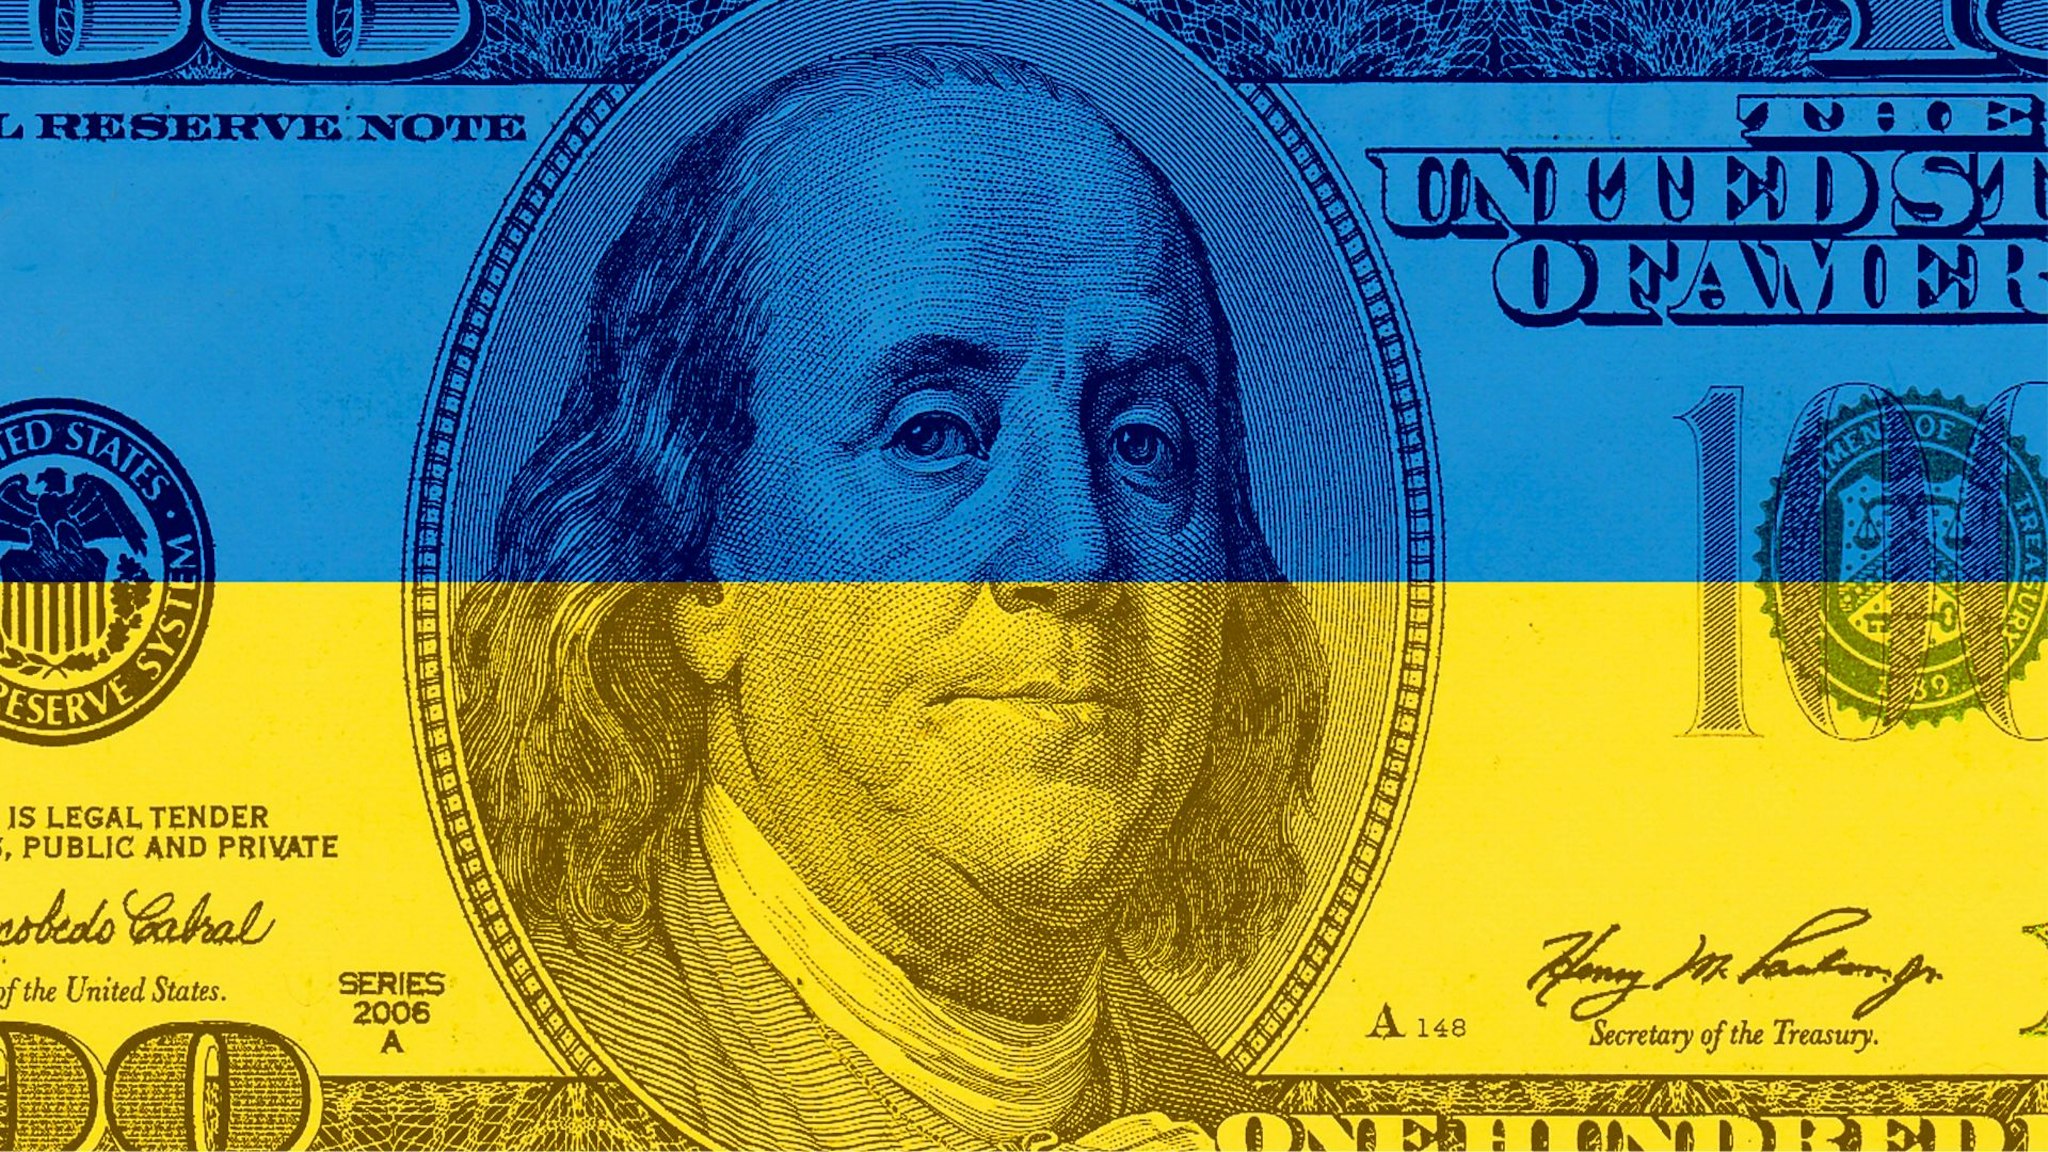 One hundred dollar bill on the background of the Ukrainian flag - stock photo